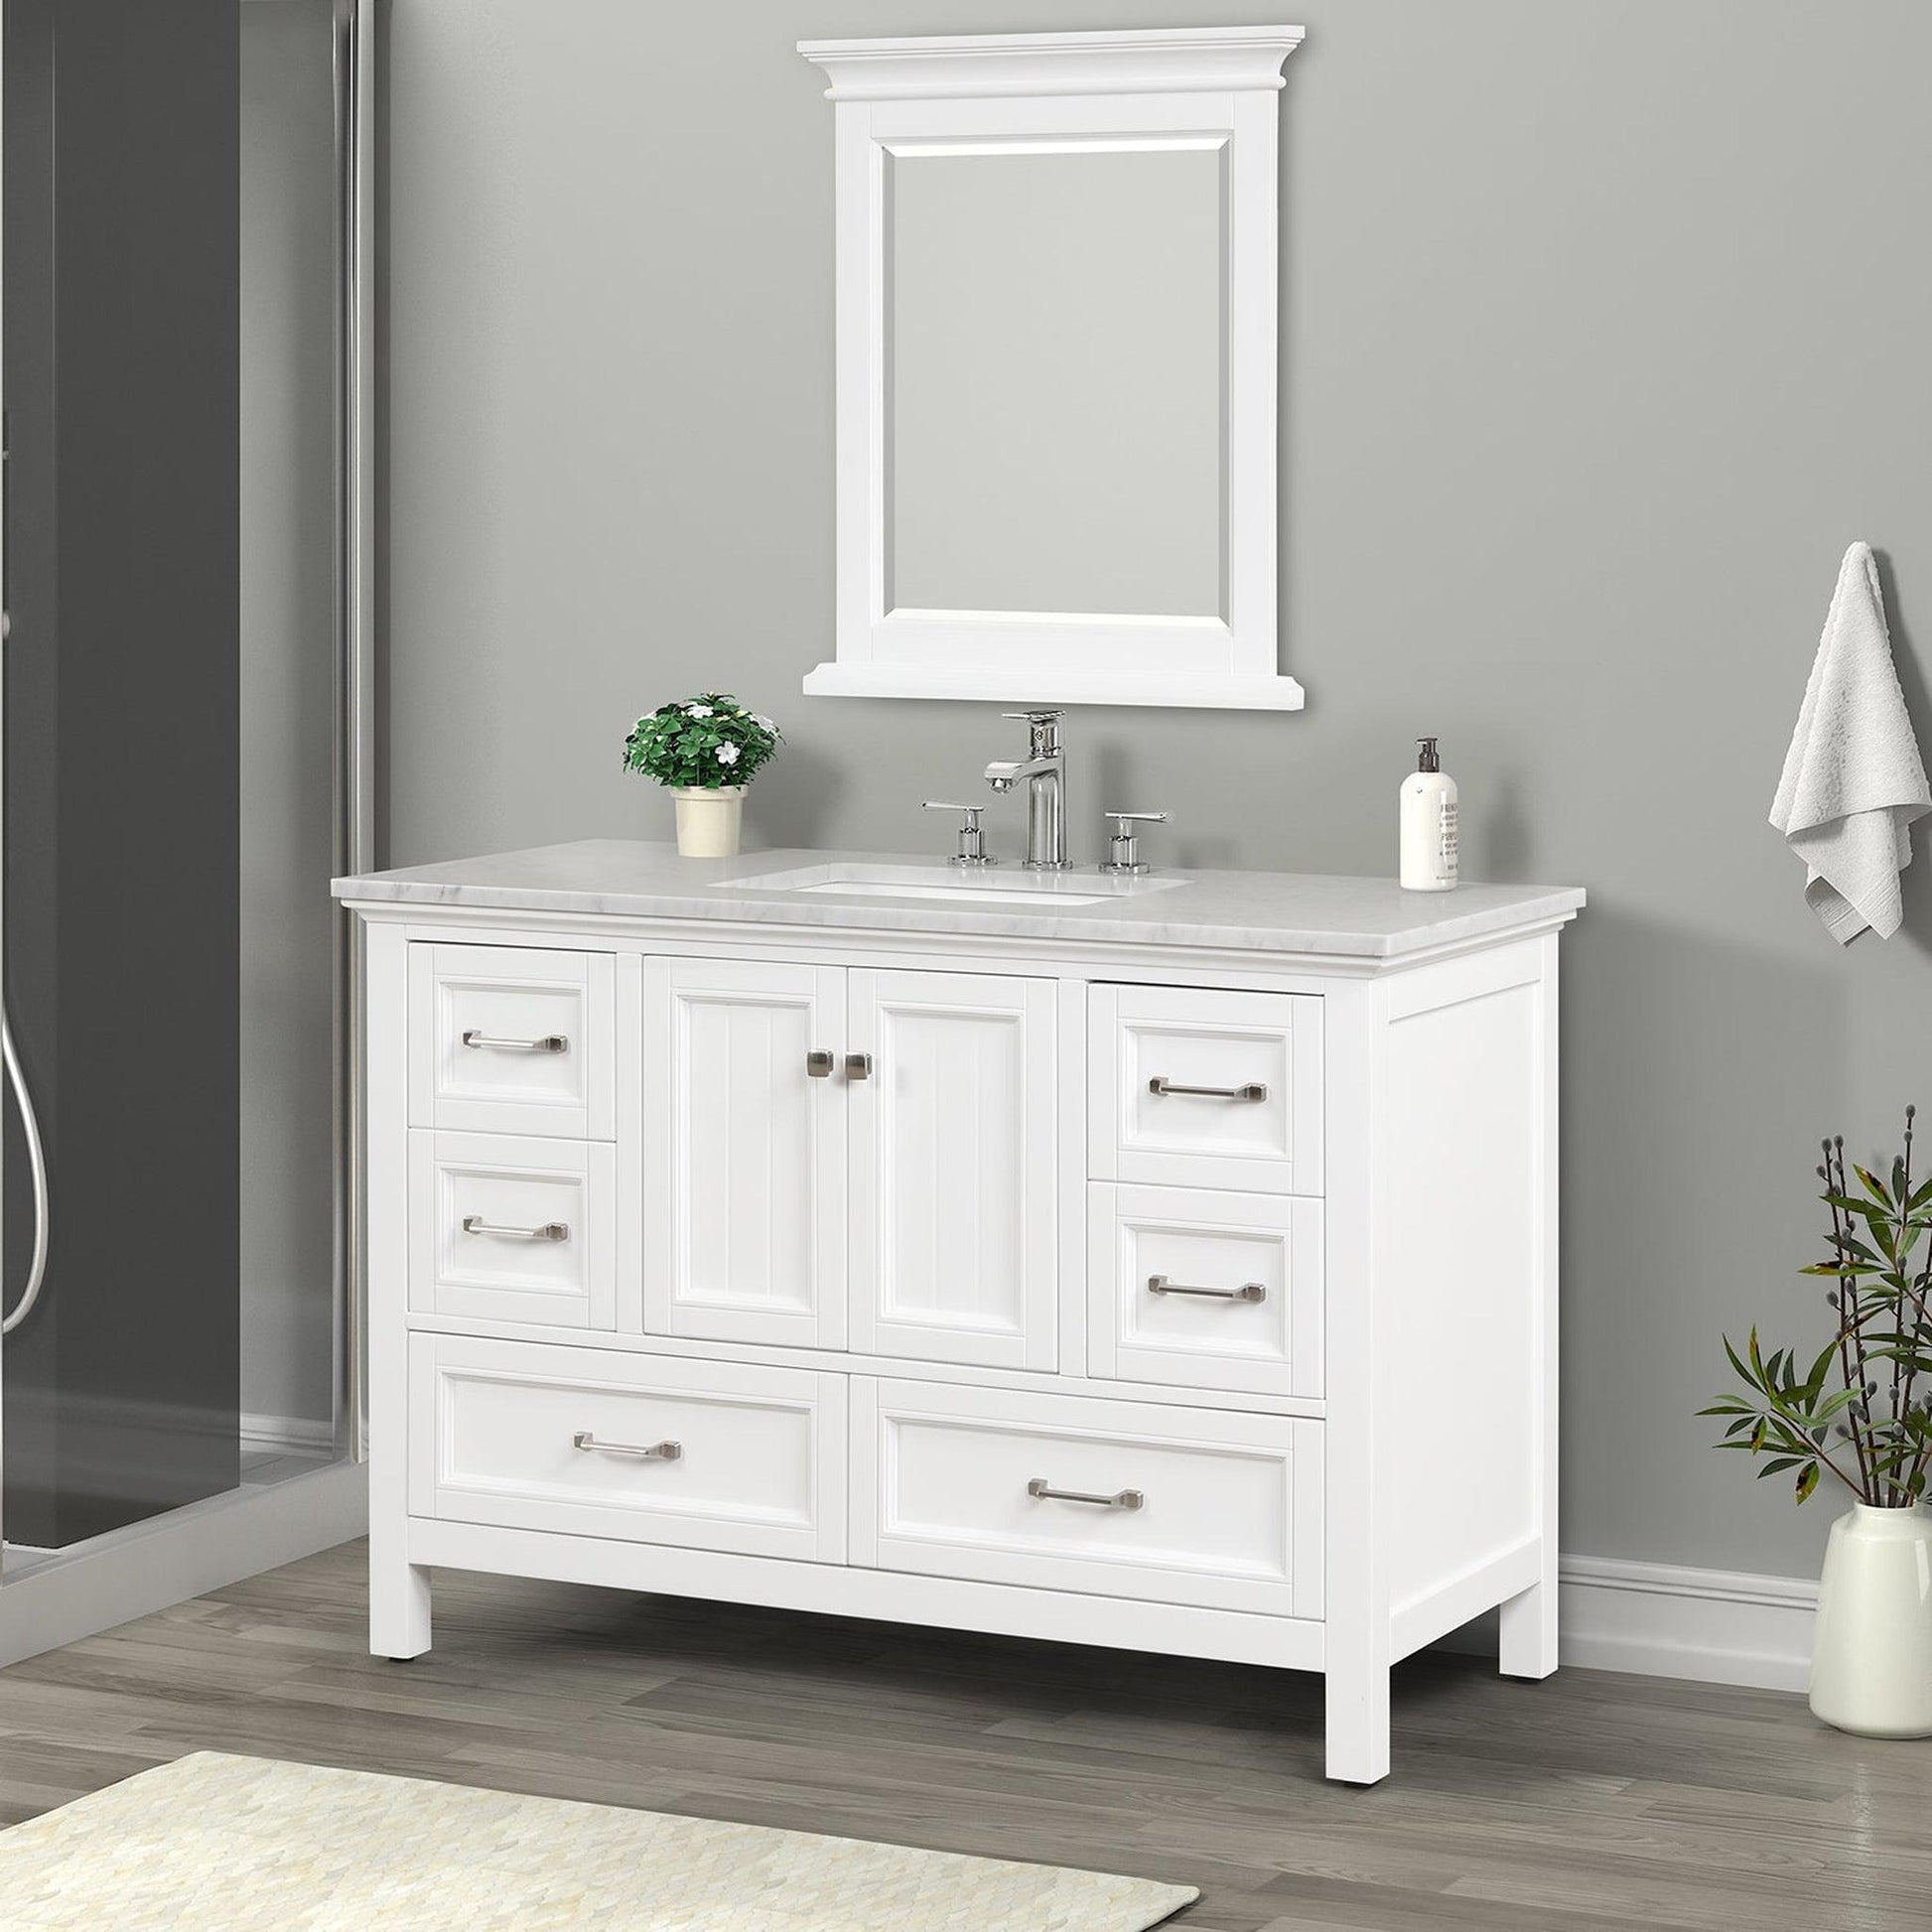 Eviva Britney 48" x 34" White Freestanding Bathroom Vanity With Carrara Marble Countertop and Single Undermount Ceramic Sink